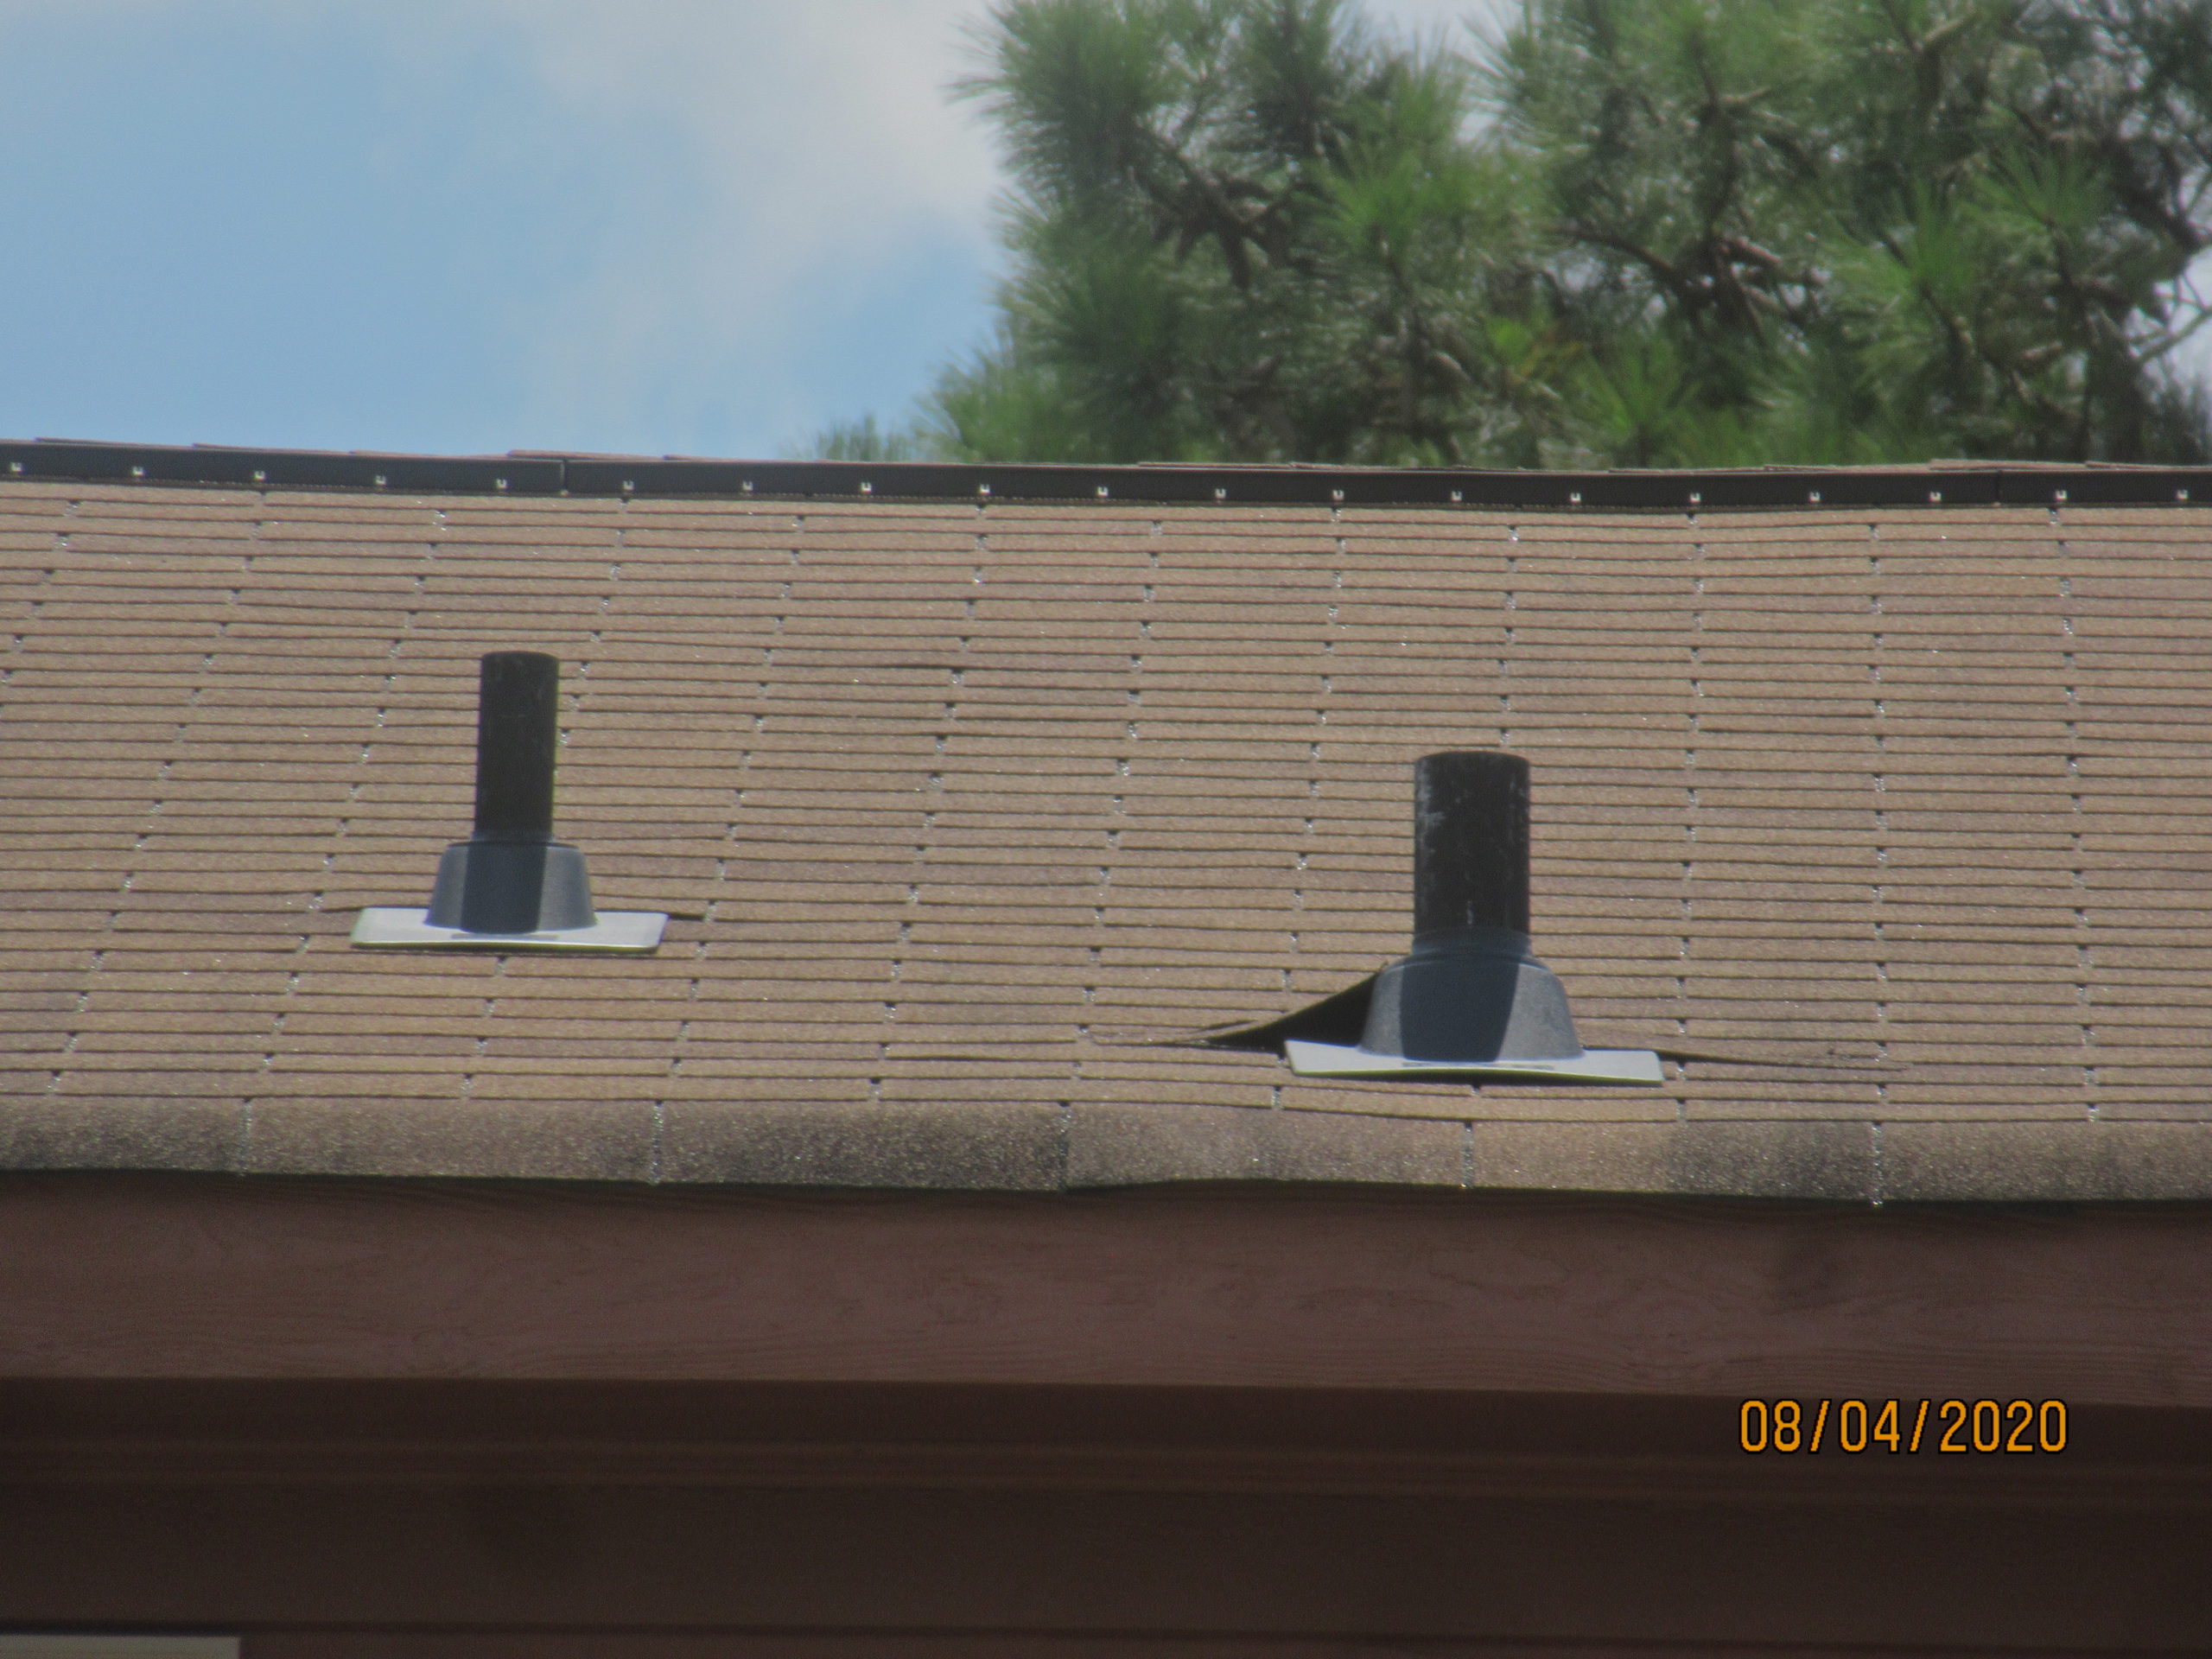 Raised shingles on vent pipe